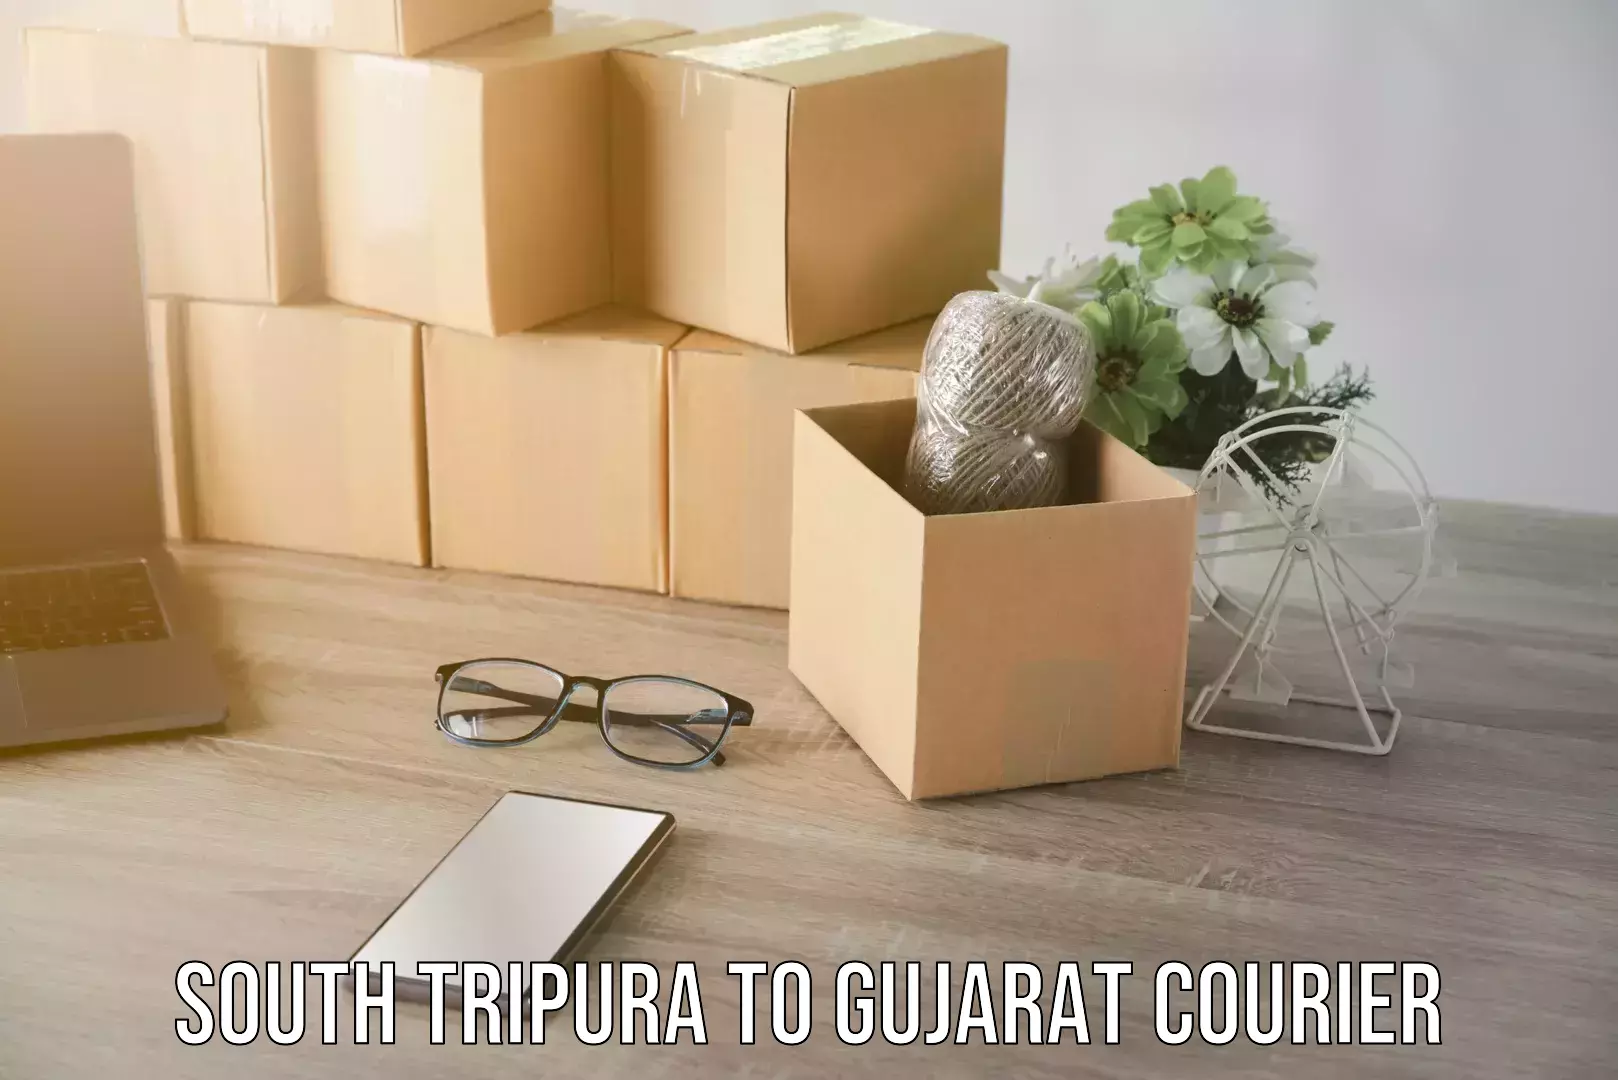 Logistics service provider South Tripura to Gujarat